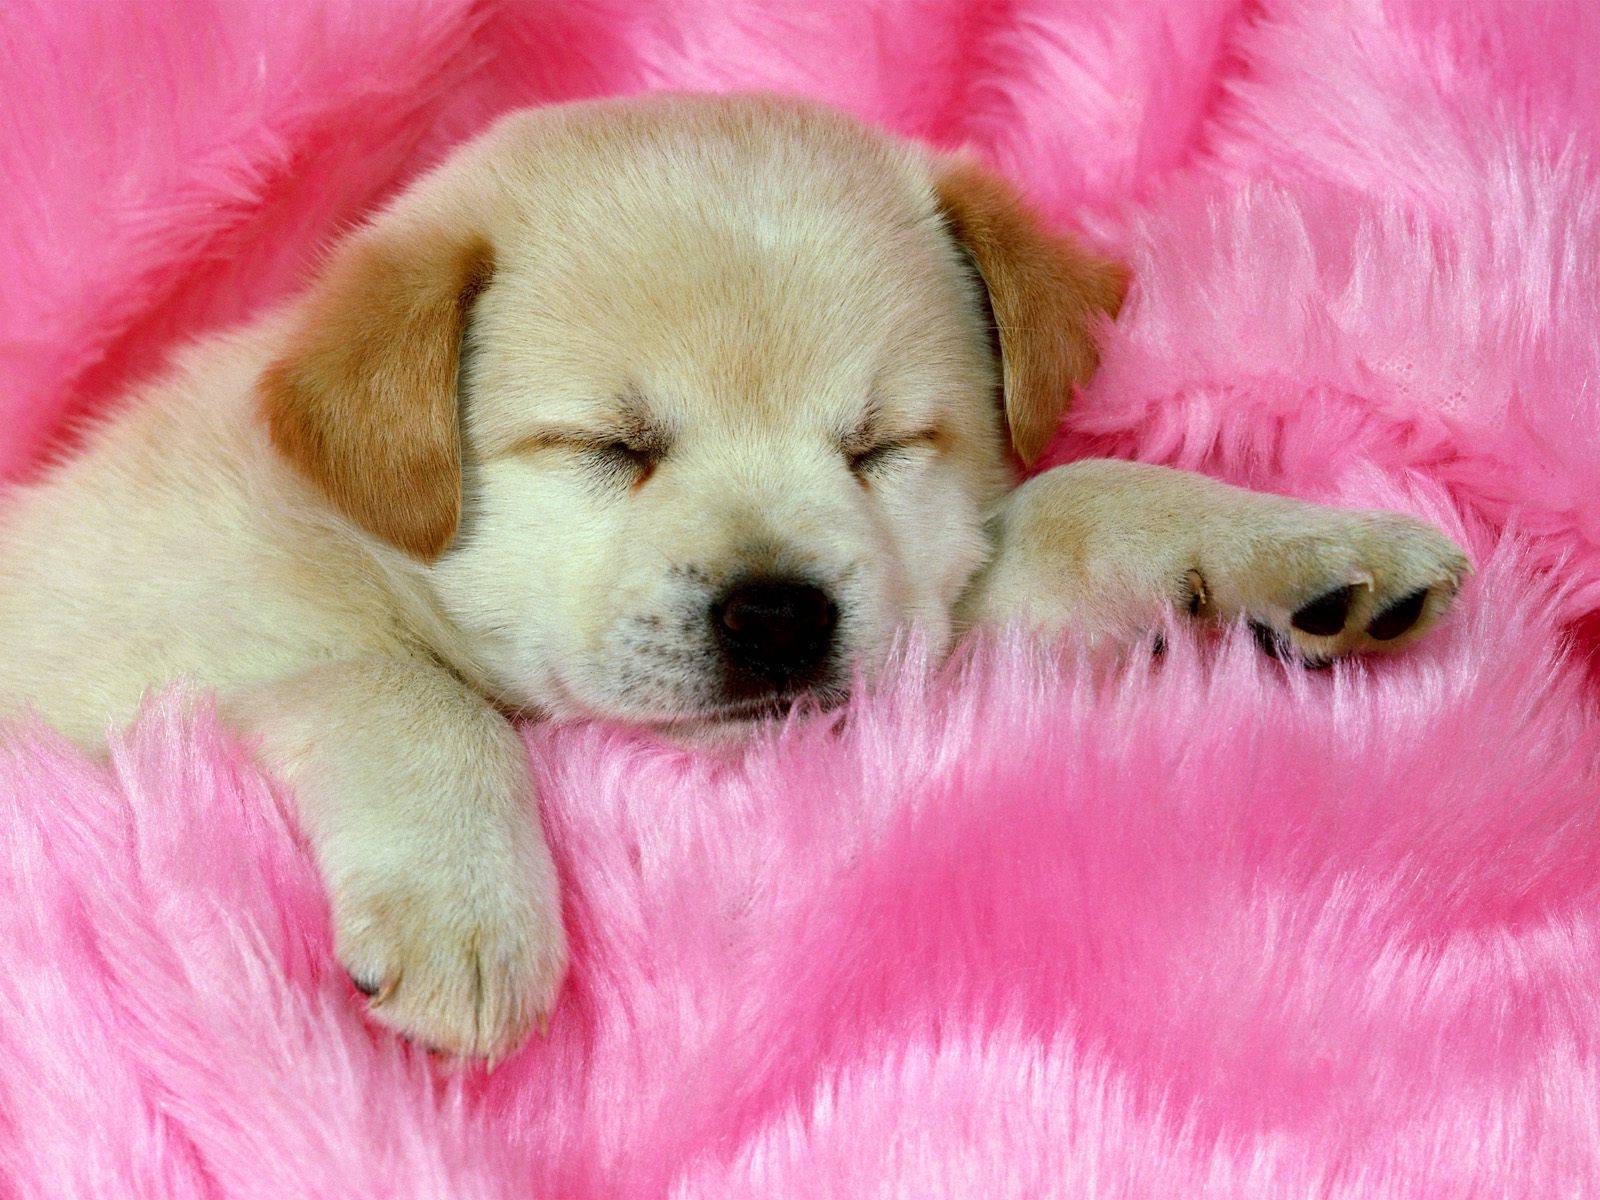 Labrador Puppy Sleeping